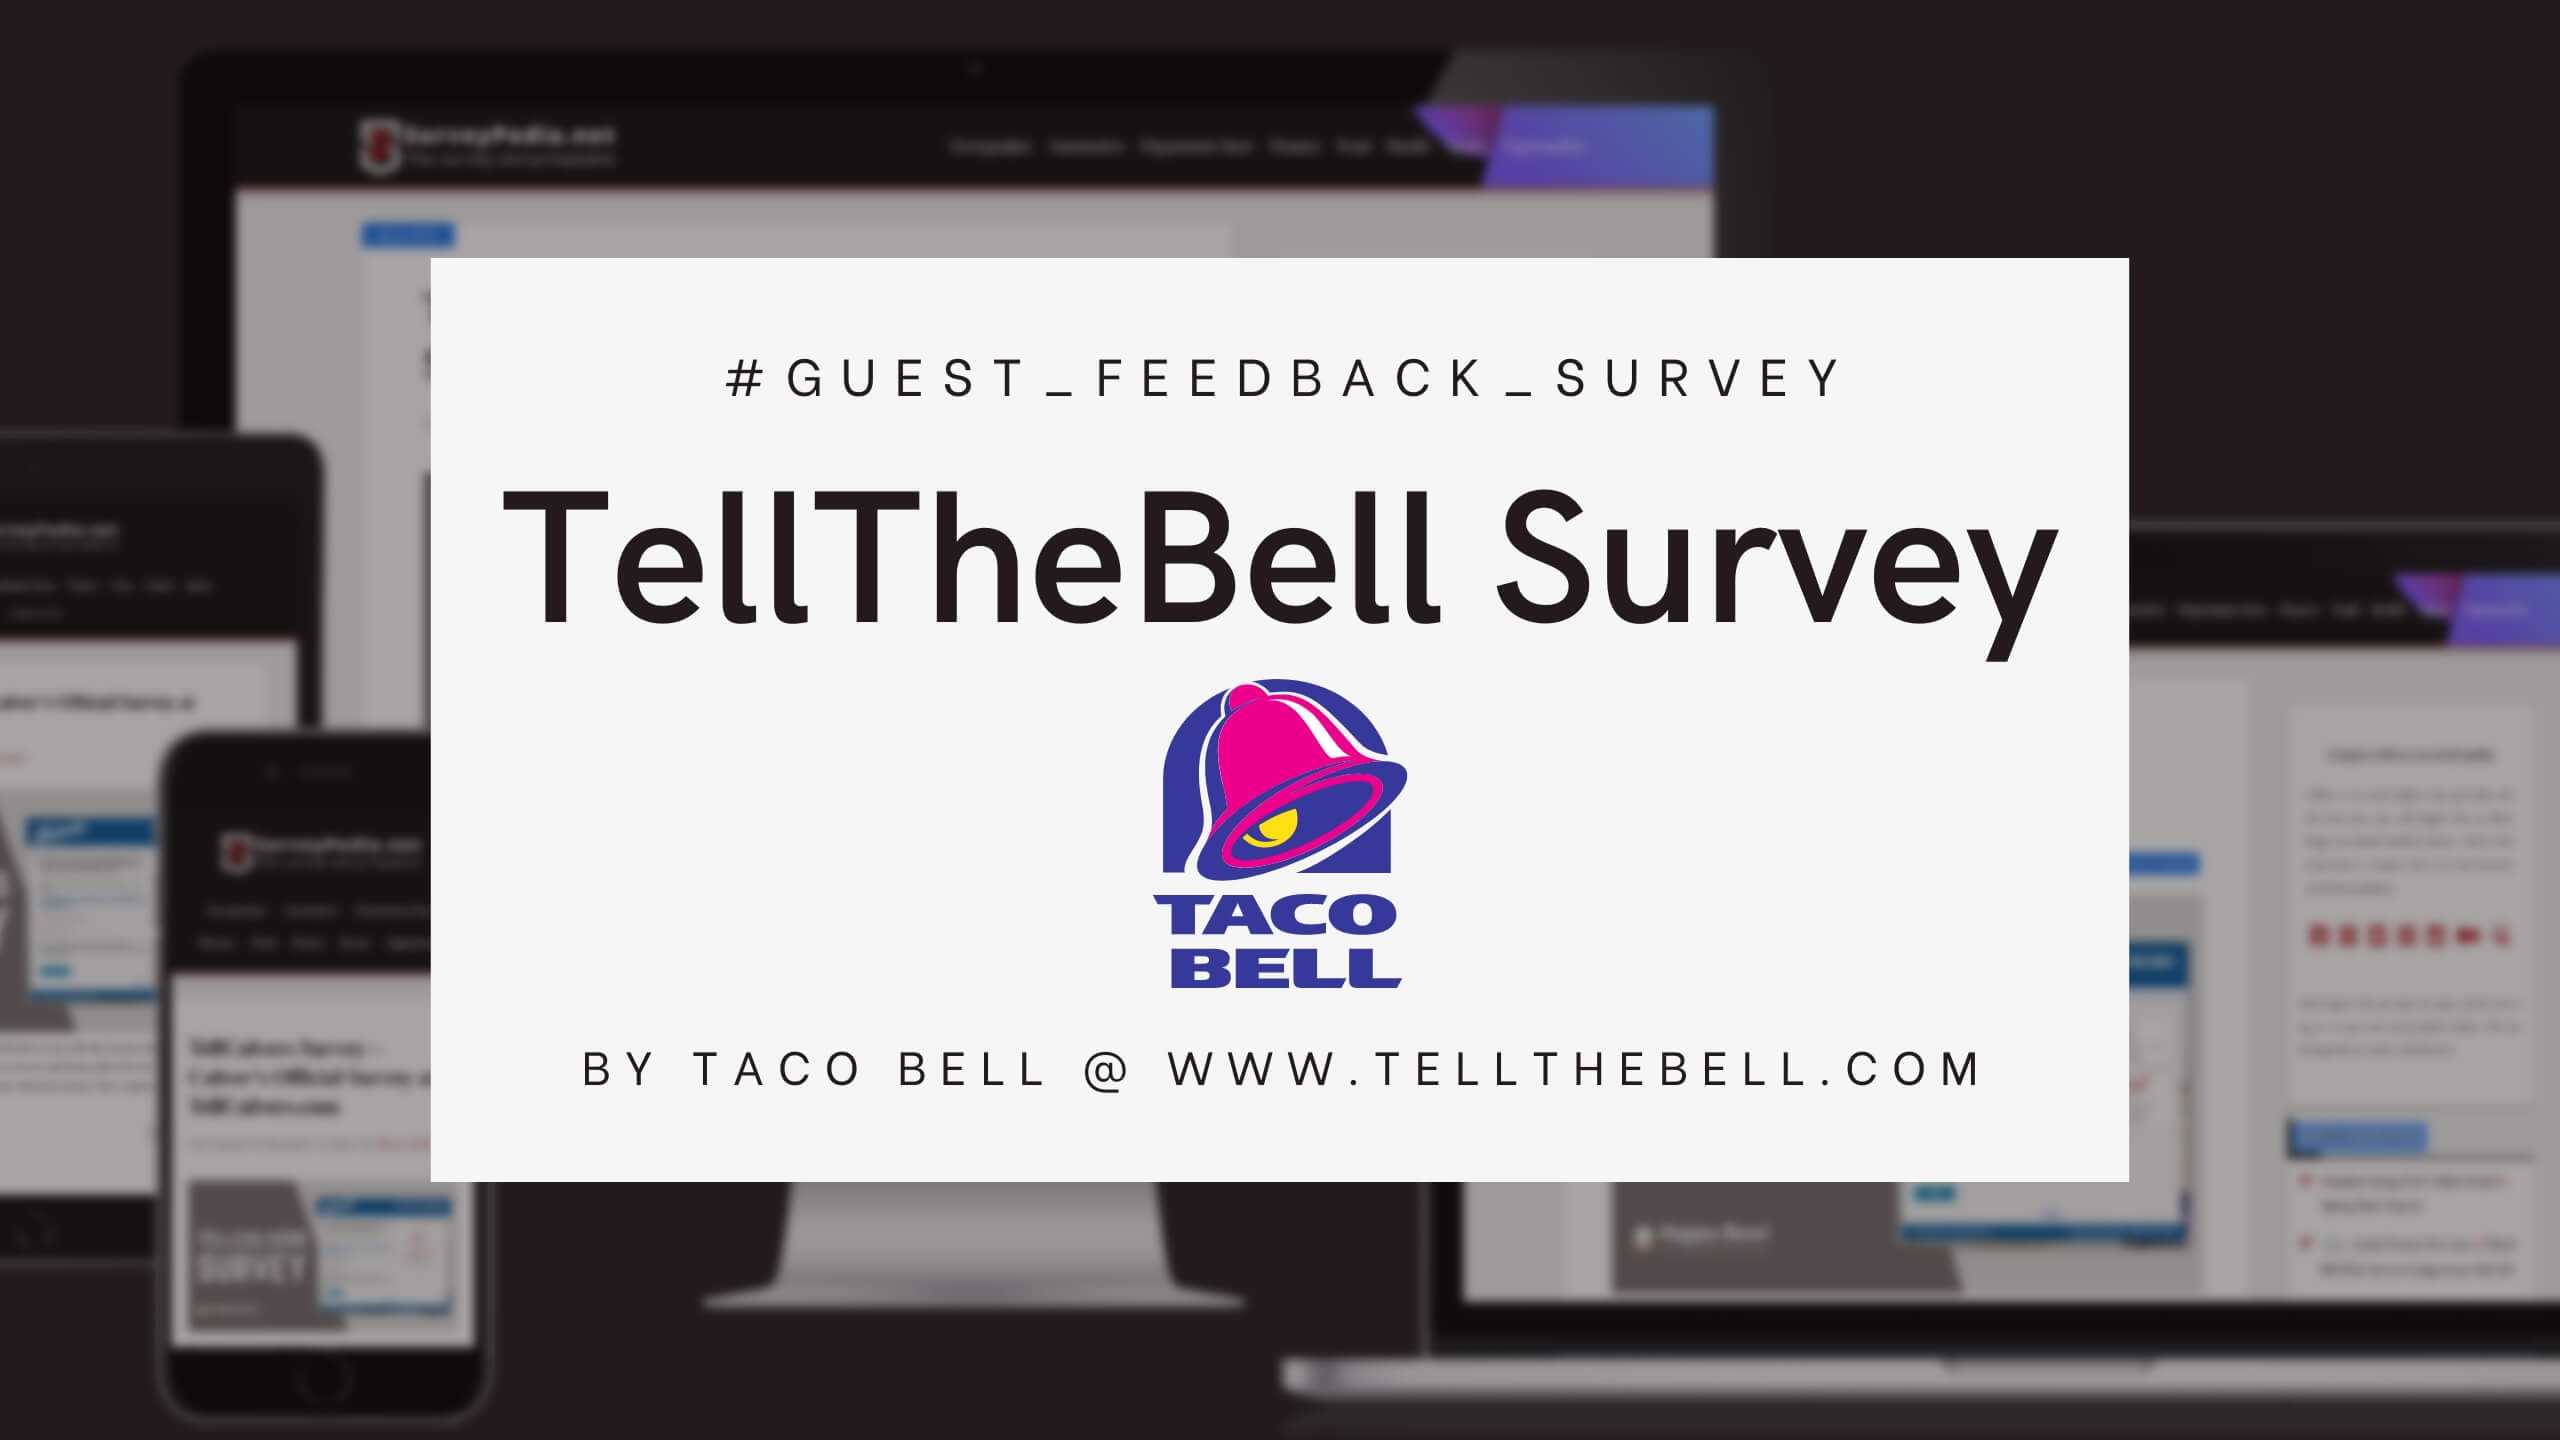 TellTheBell Survey : Taco Bell Official Customer Survey at www.tellthebell.com